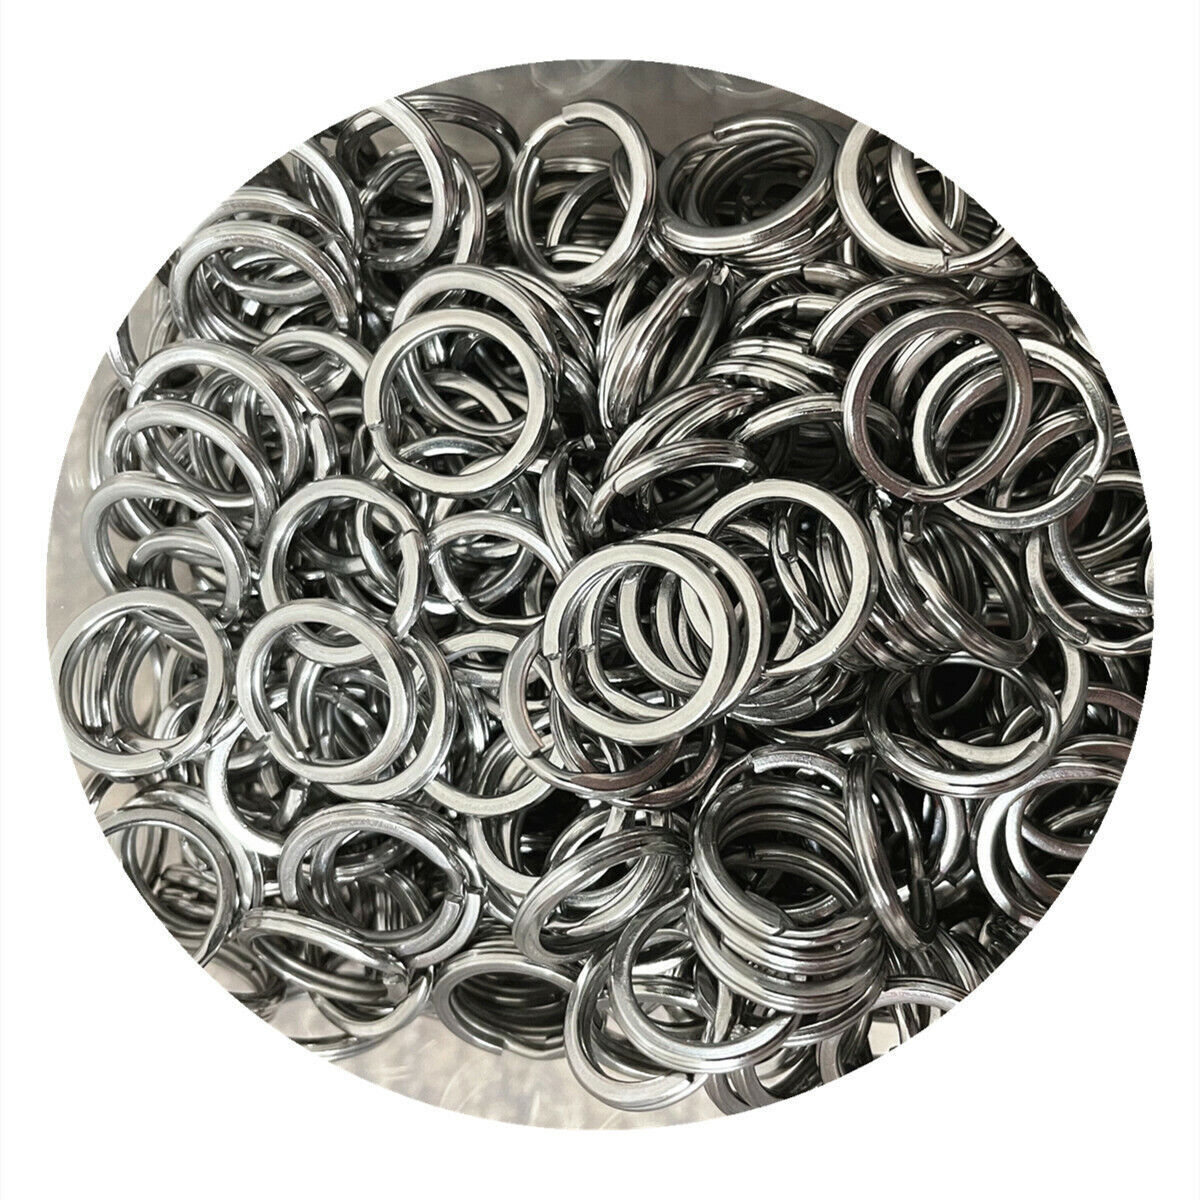 15mm 10-100 pack Stainless Steel Small Key Rings Split Ring Flat Metal Keychain